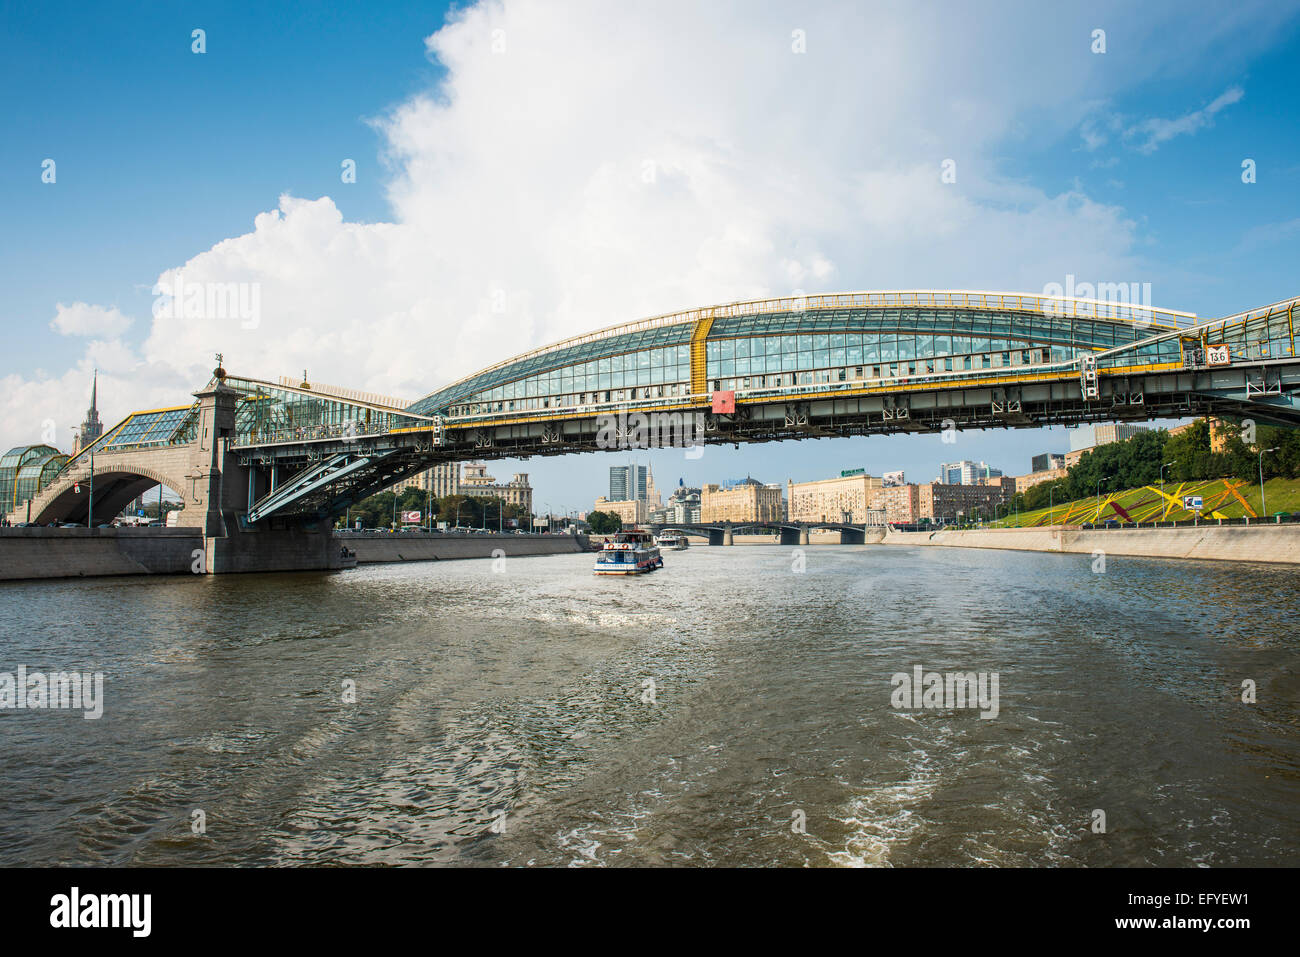 Zhivopisny Bridge across the Moskva River, Moscow, Russia Stock Photo